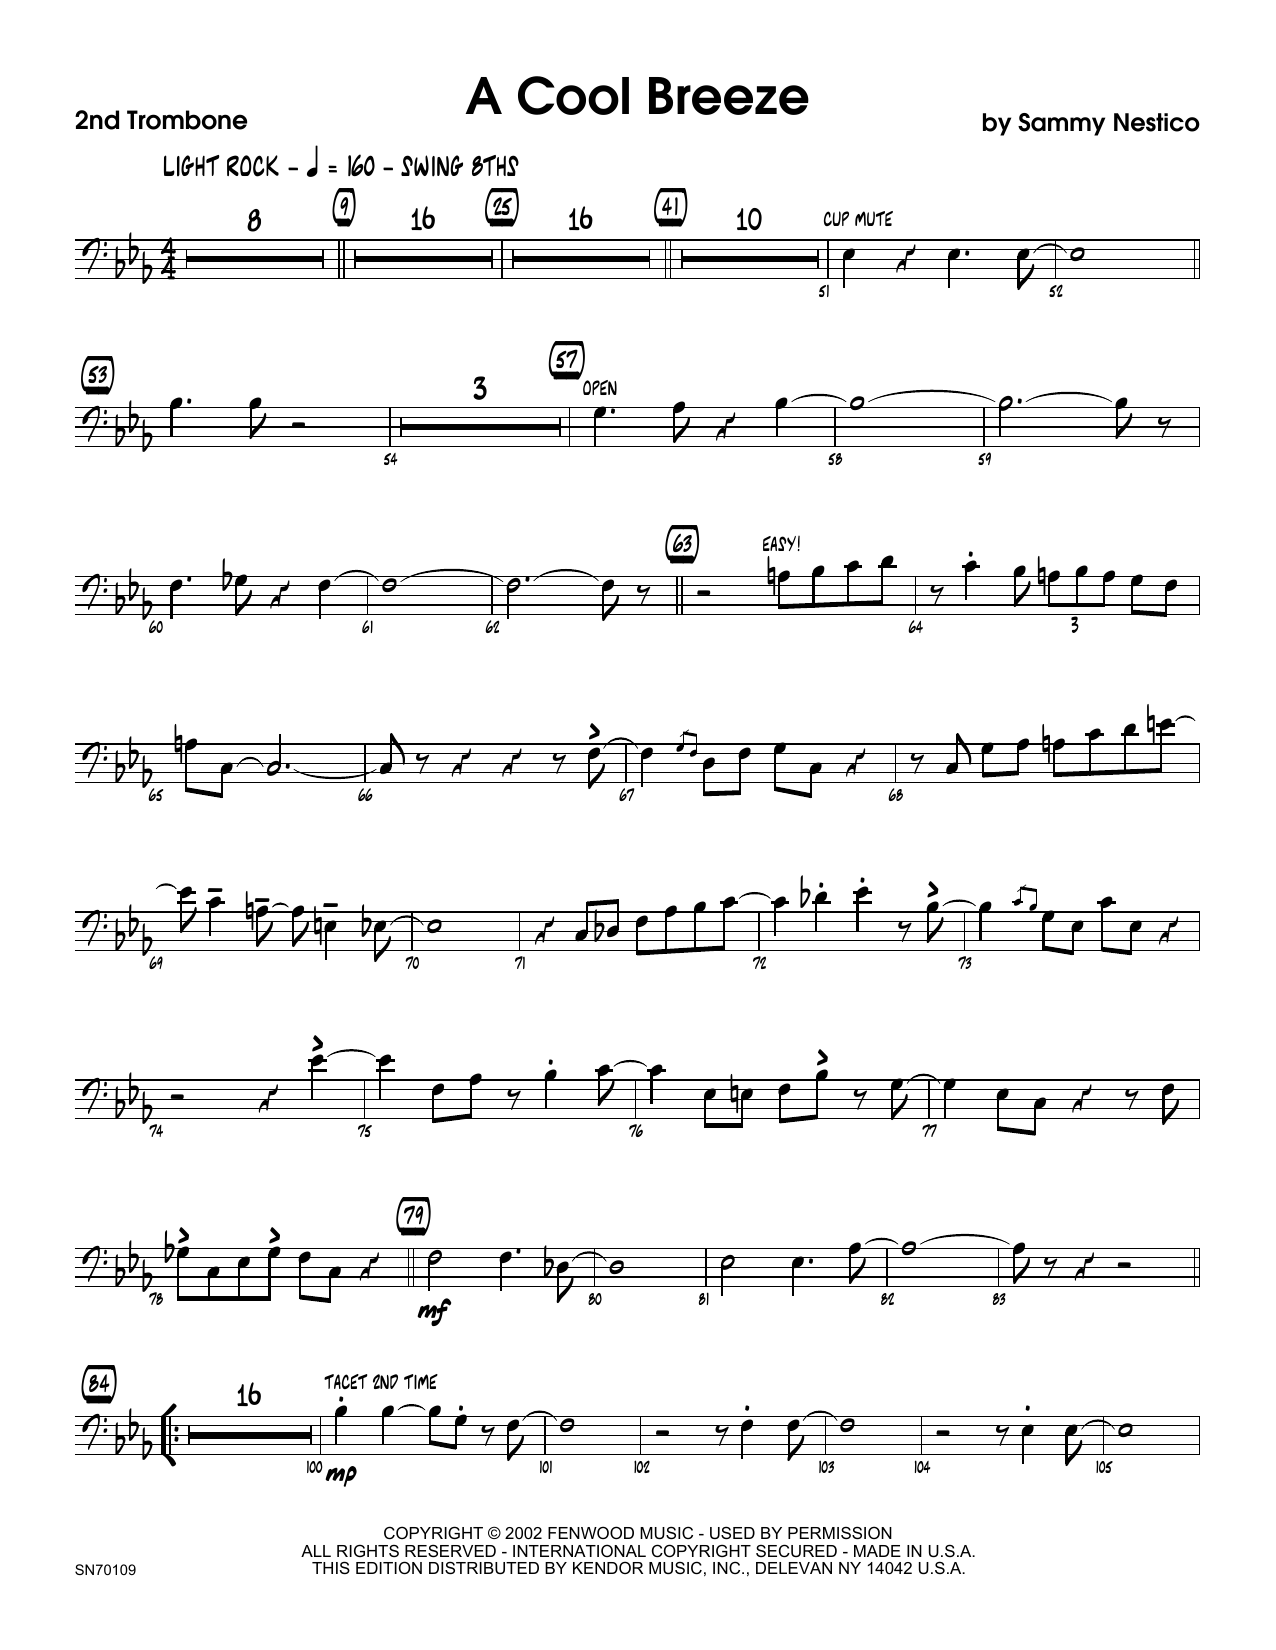 Download Sammy Nestico A Cool Breeze - 2nd Trombone Sheet Music